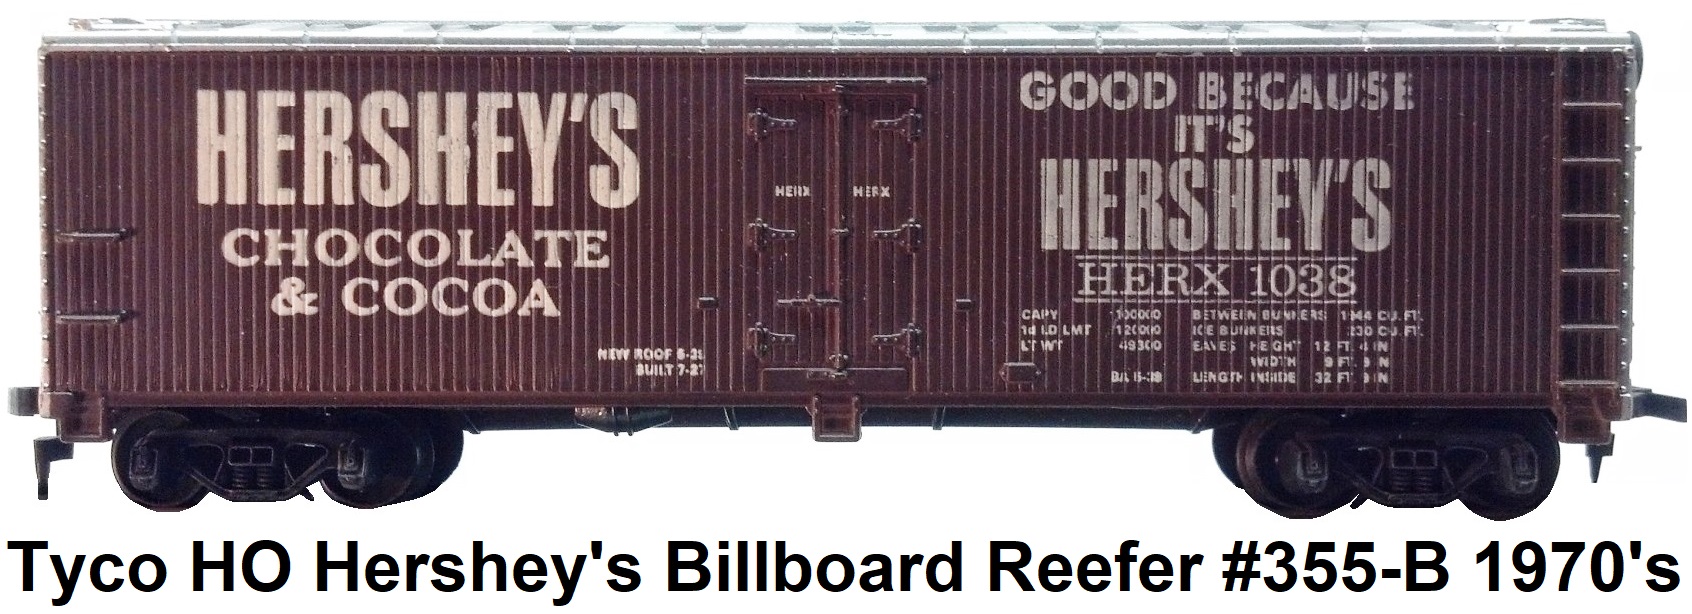 Tyco HO Hershey's Chocolate 40' wood-side billboard reefer #355-B